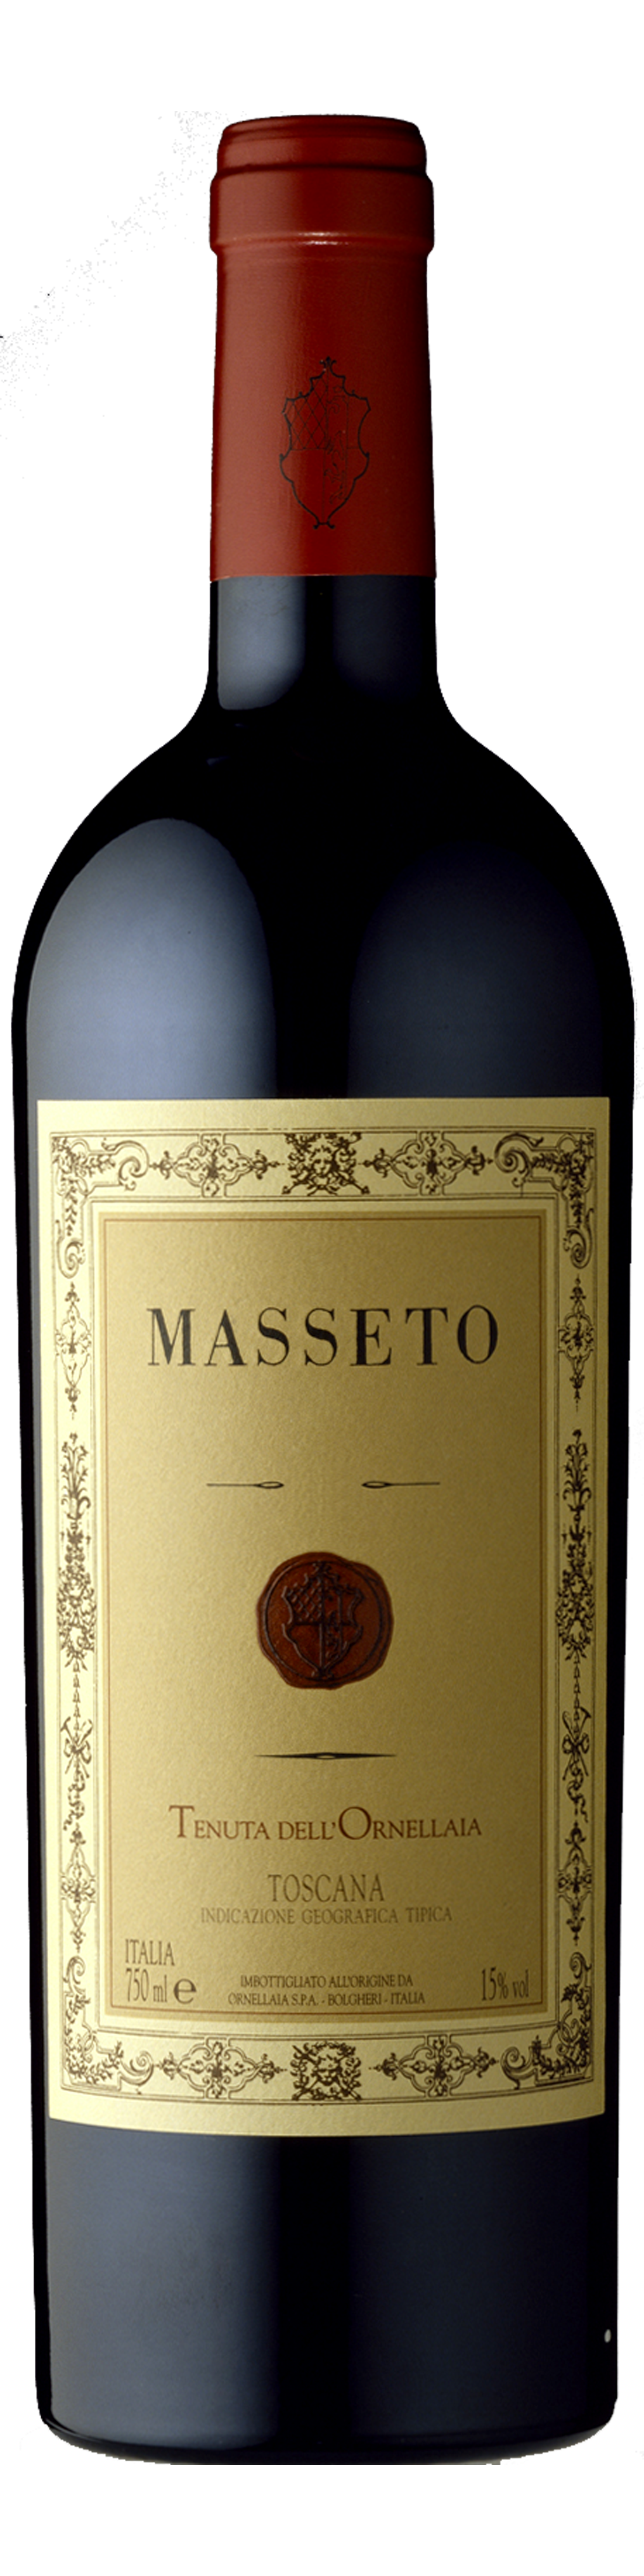 Bottle shot of 2008 Masseto